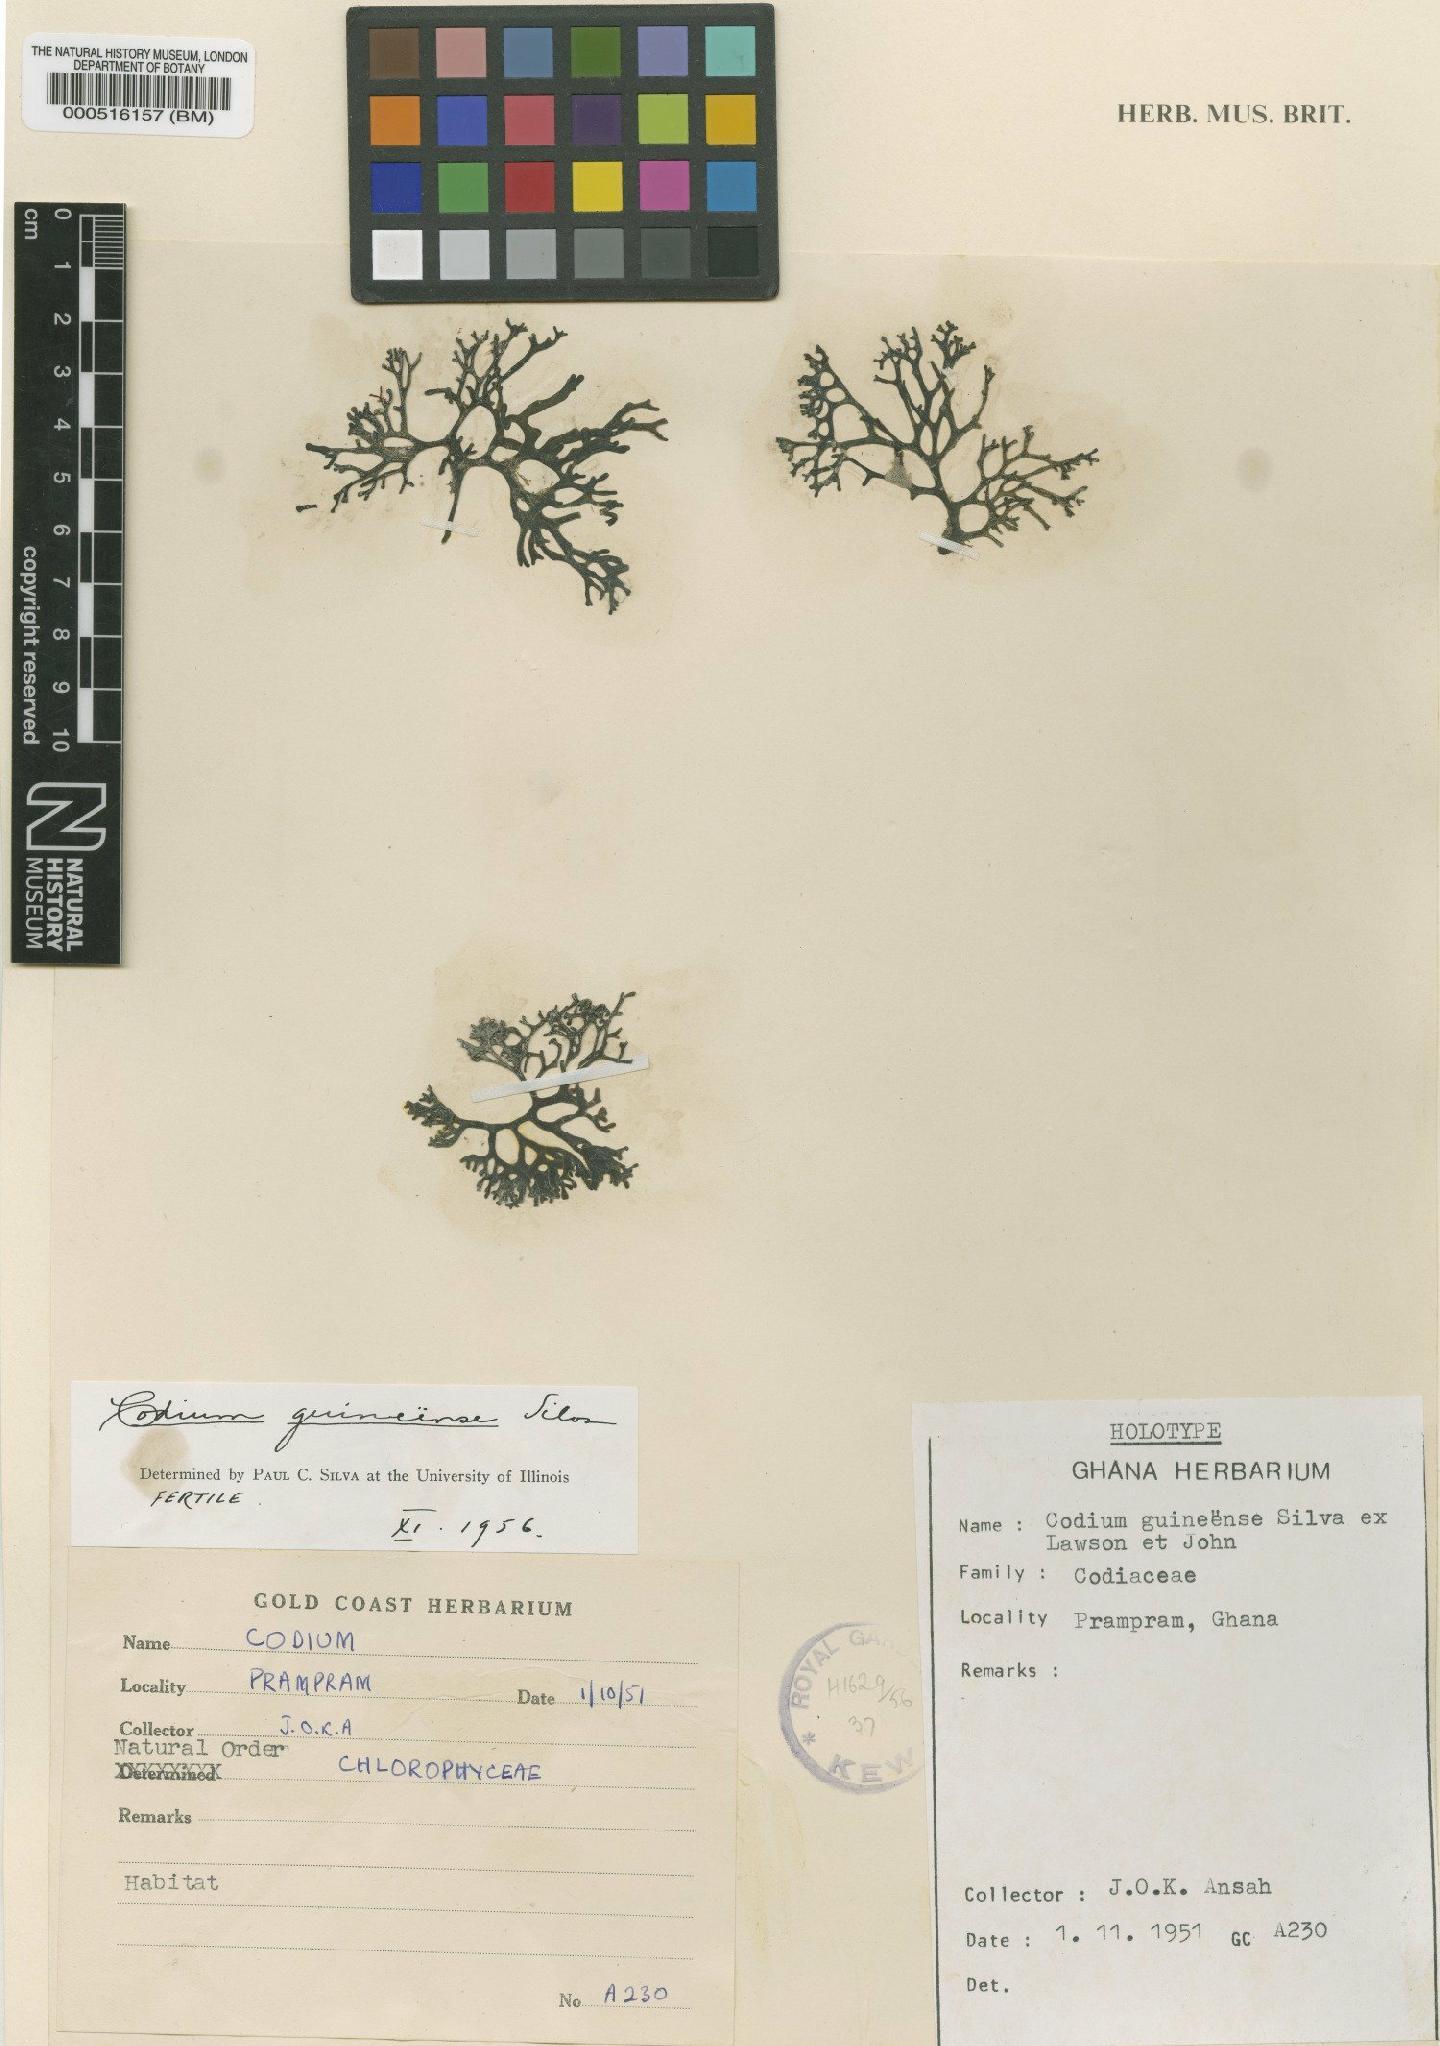 To NHMUK collection (Codium guineense Silva ex G.W.Lawson & D.M.John; Holotype; NHMUK:ecatalogue:4830740)